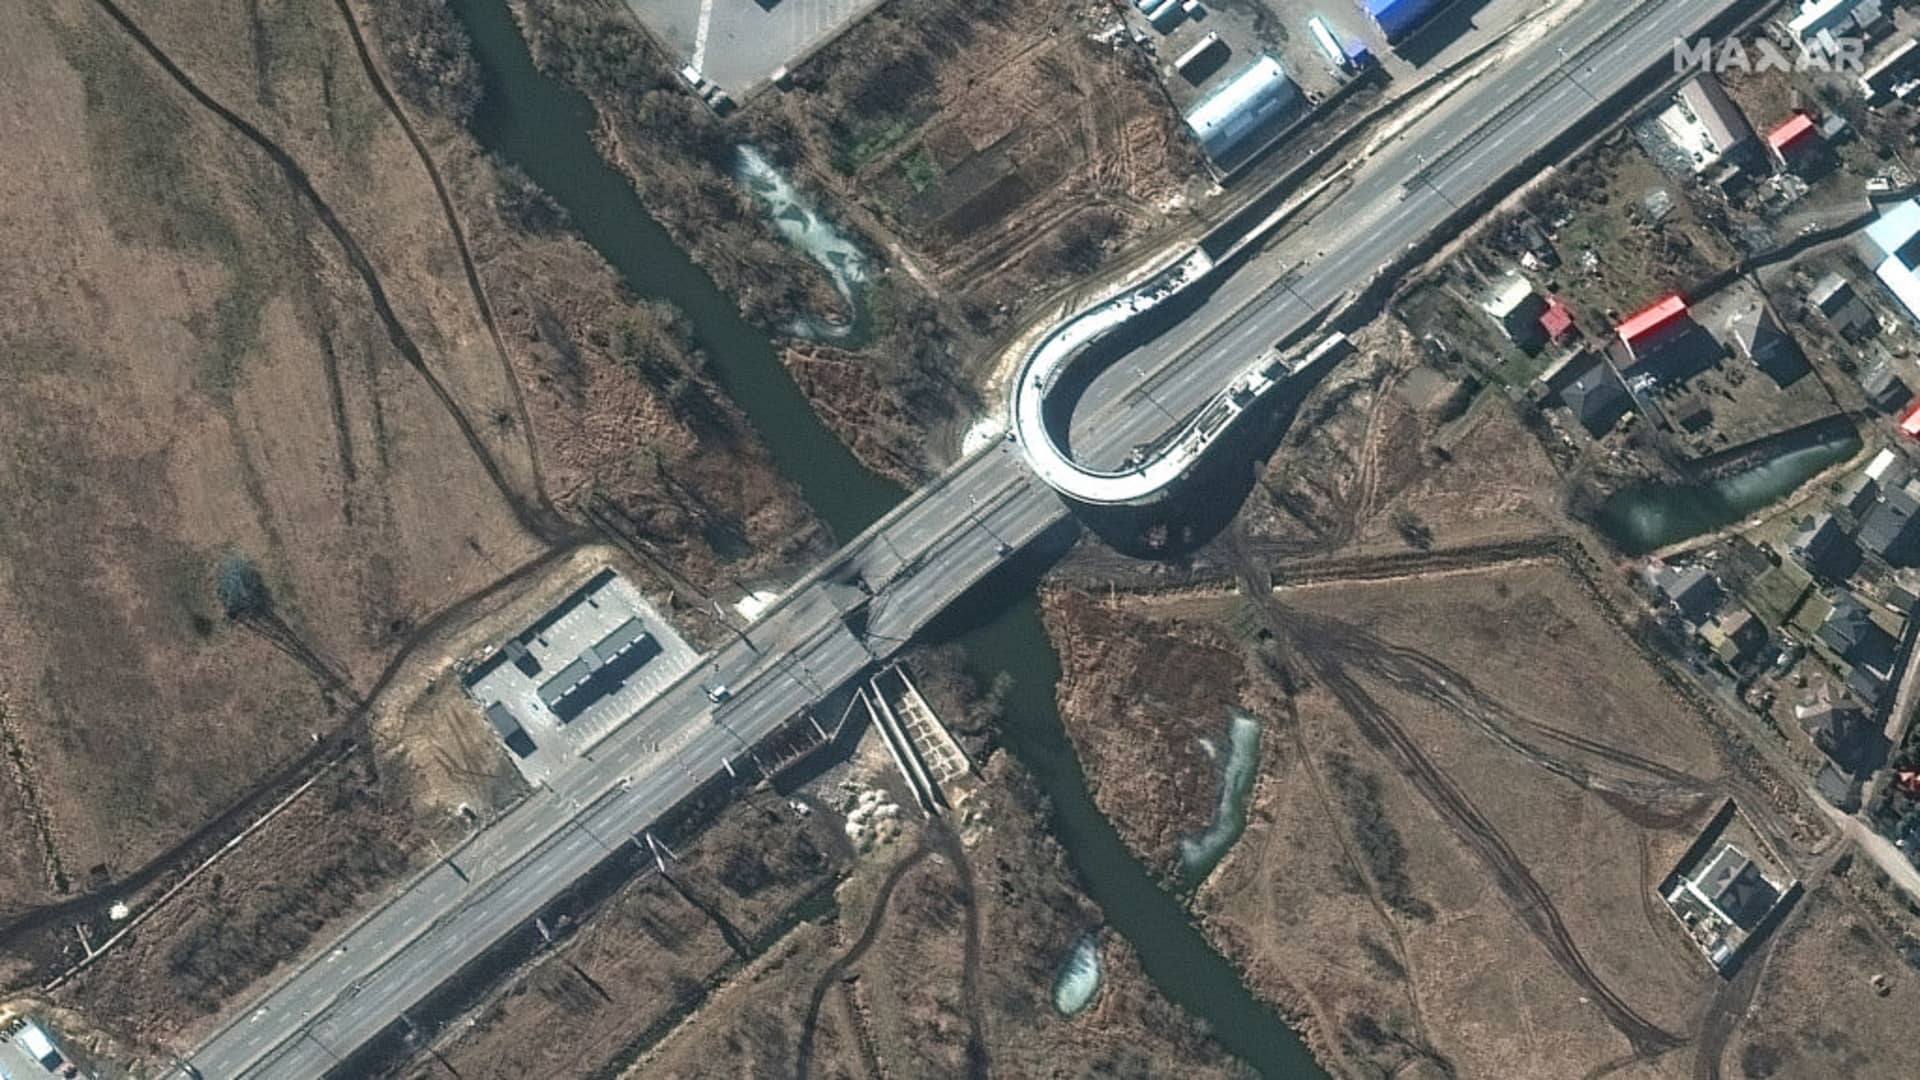 Maxar closeup satellite imagery of destroyed vehicles and bridge damage in Irpin, Ukraine - Northwest of Kyiv.